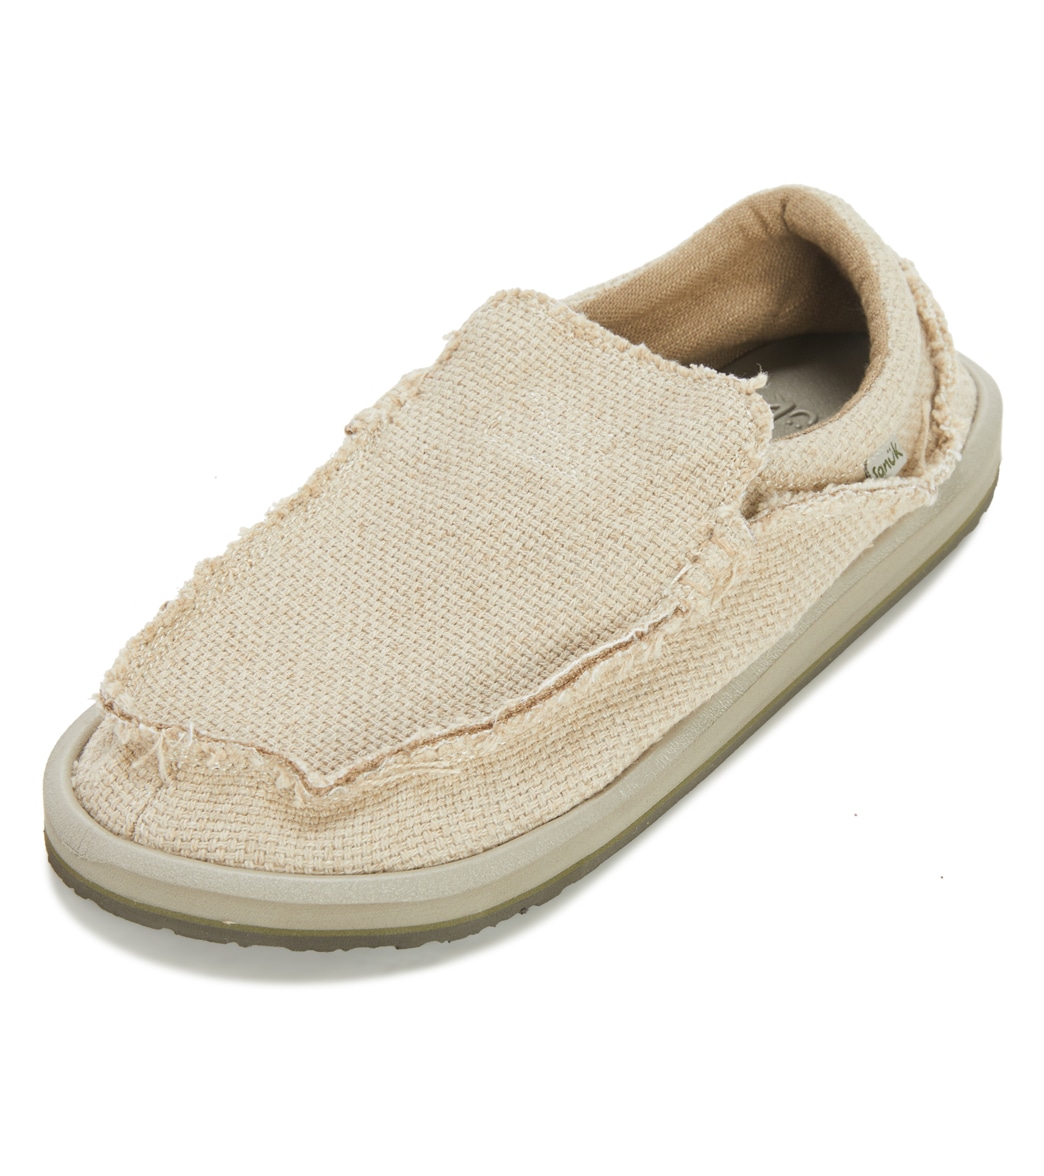 Sanuk Men's Chiba Hemp Slip On Shoes Shoes - Natural 10 100% Rubber - Swimoutlet.com